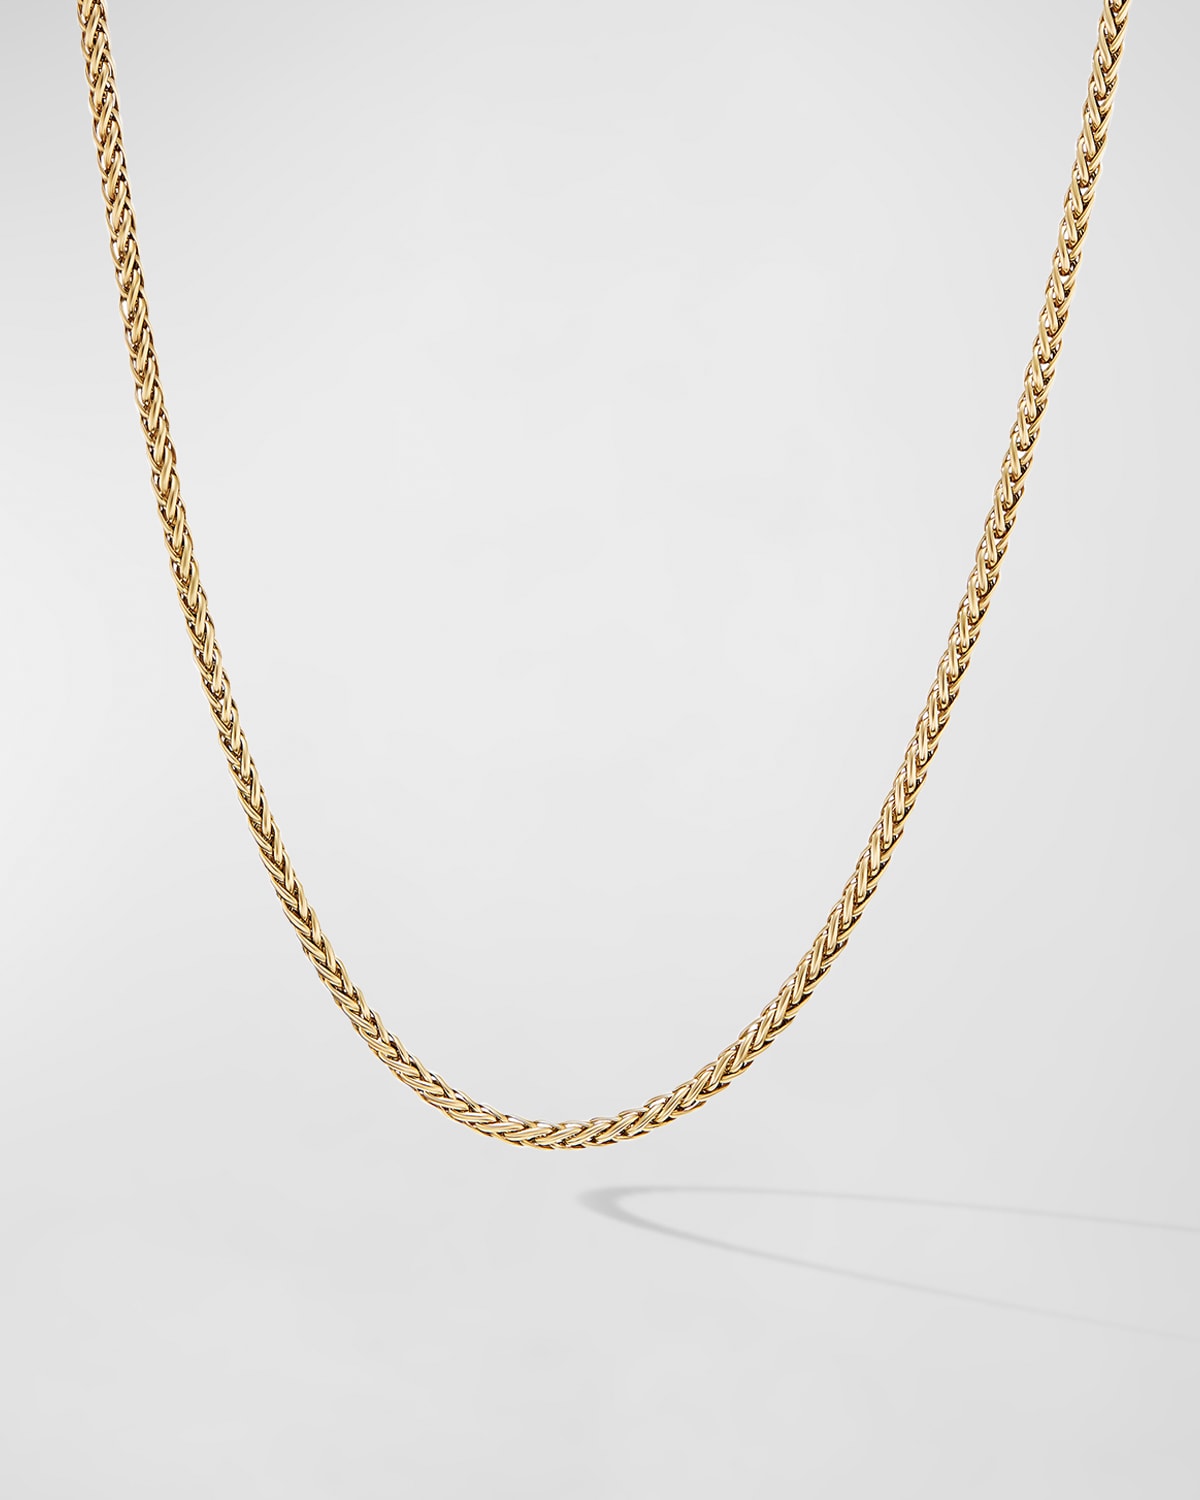 David Yurman Men's Wheat Chain Necklace in 18K Gold, 2.5mm, 18"L